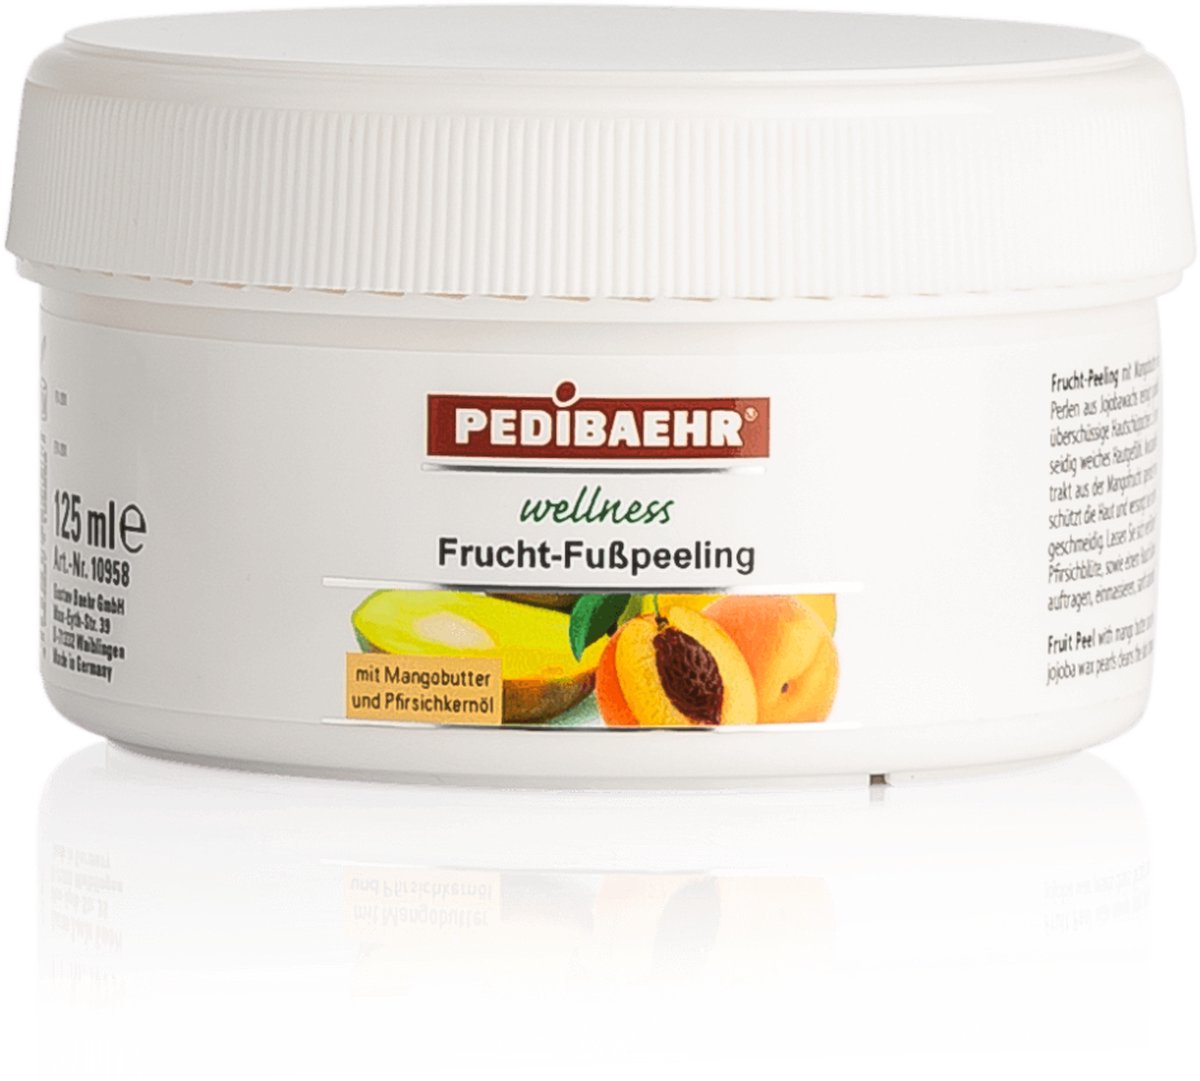 PEDIBAEHR - Voetpeeling - Mango-Perzik - 10958 - 125 ml - Wellness - Vegan - Scrub -